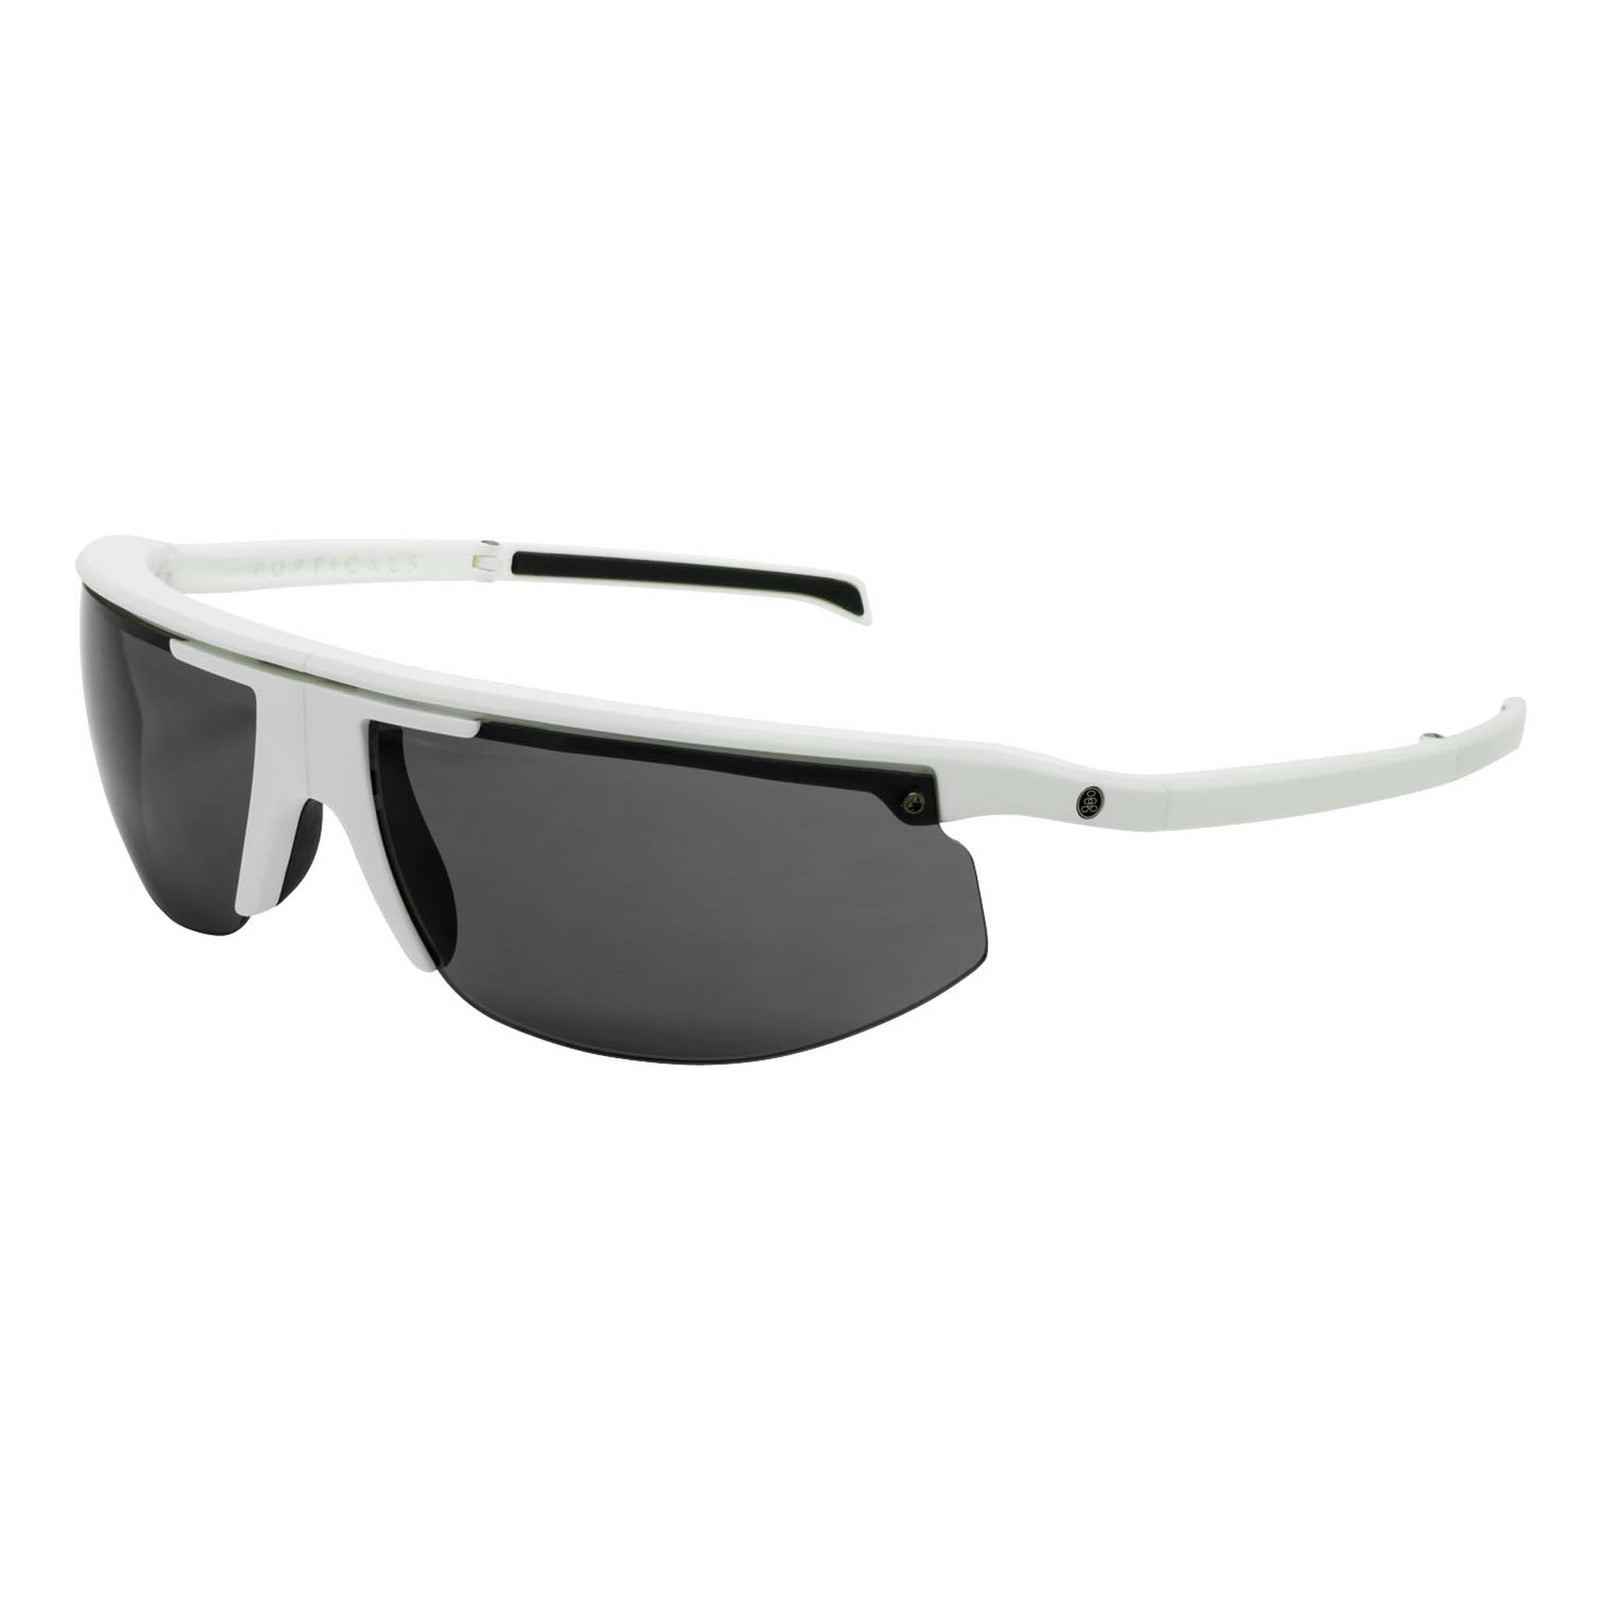 Popticals, Premium Compact Sunglasses, PopStar, 010040-WMGP, Polarized Sunglasses, Matte White Frame, Gray Lenses, Glam View